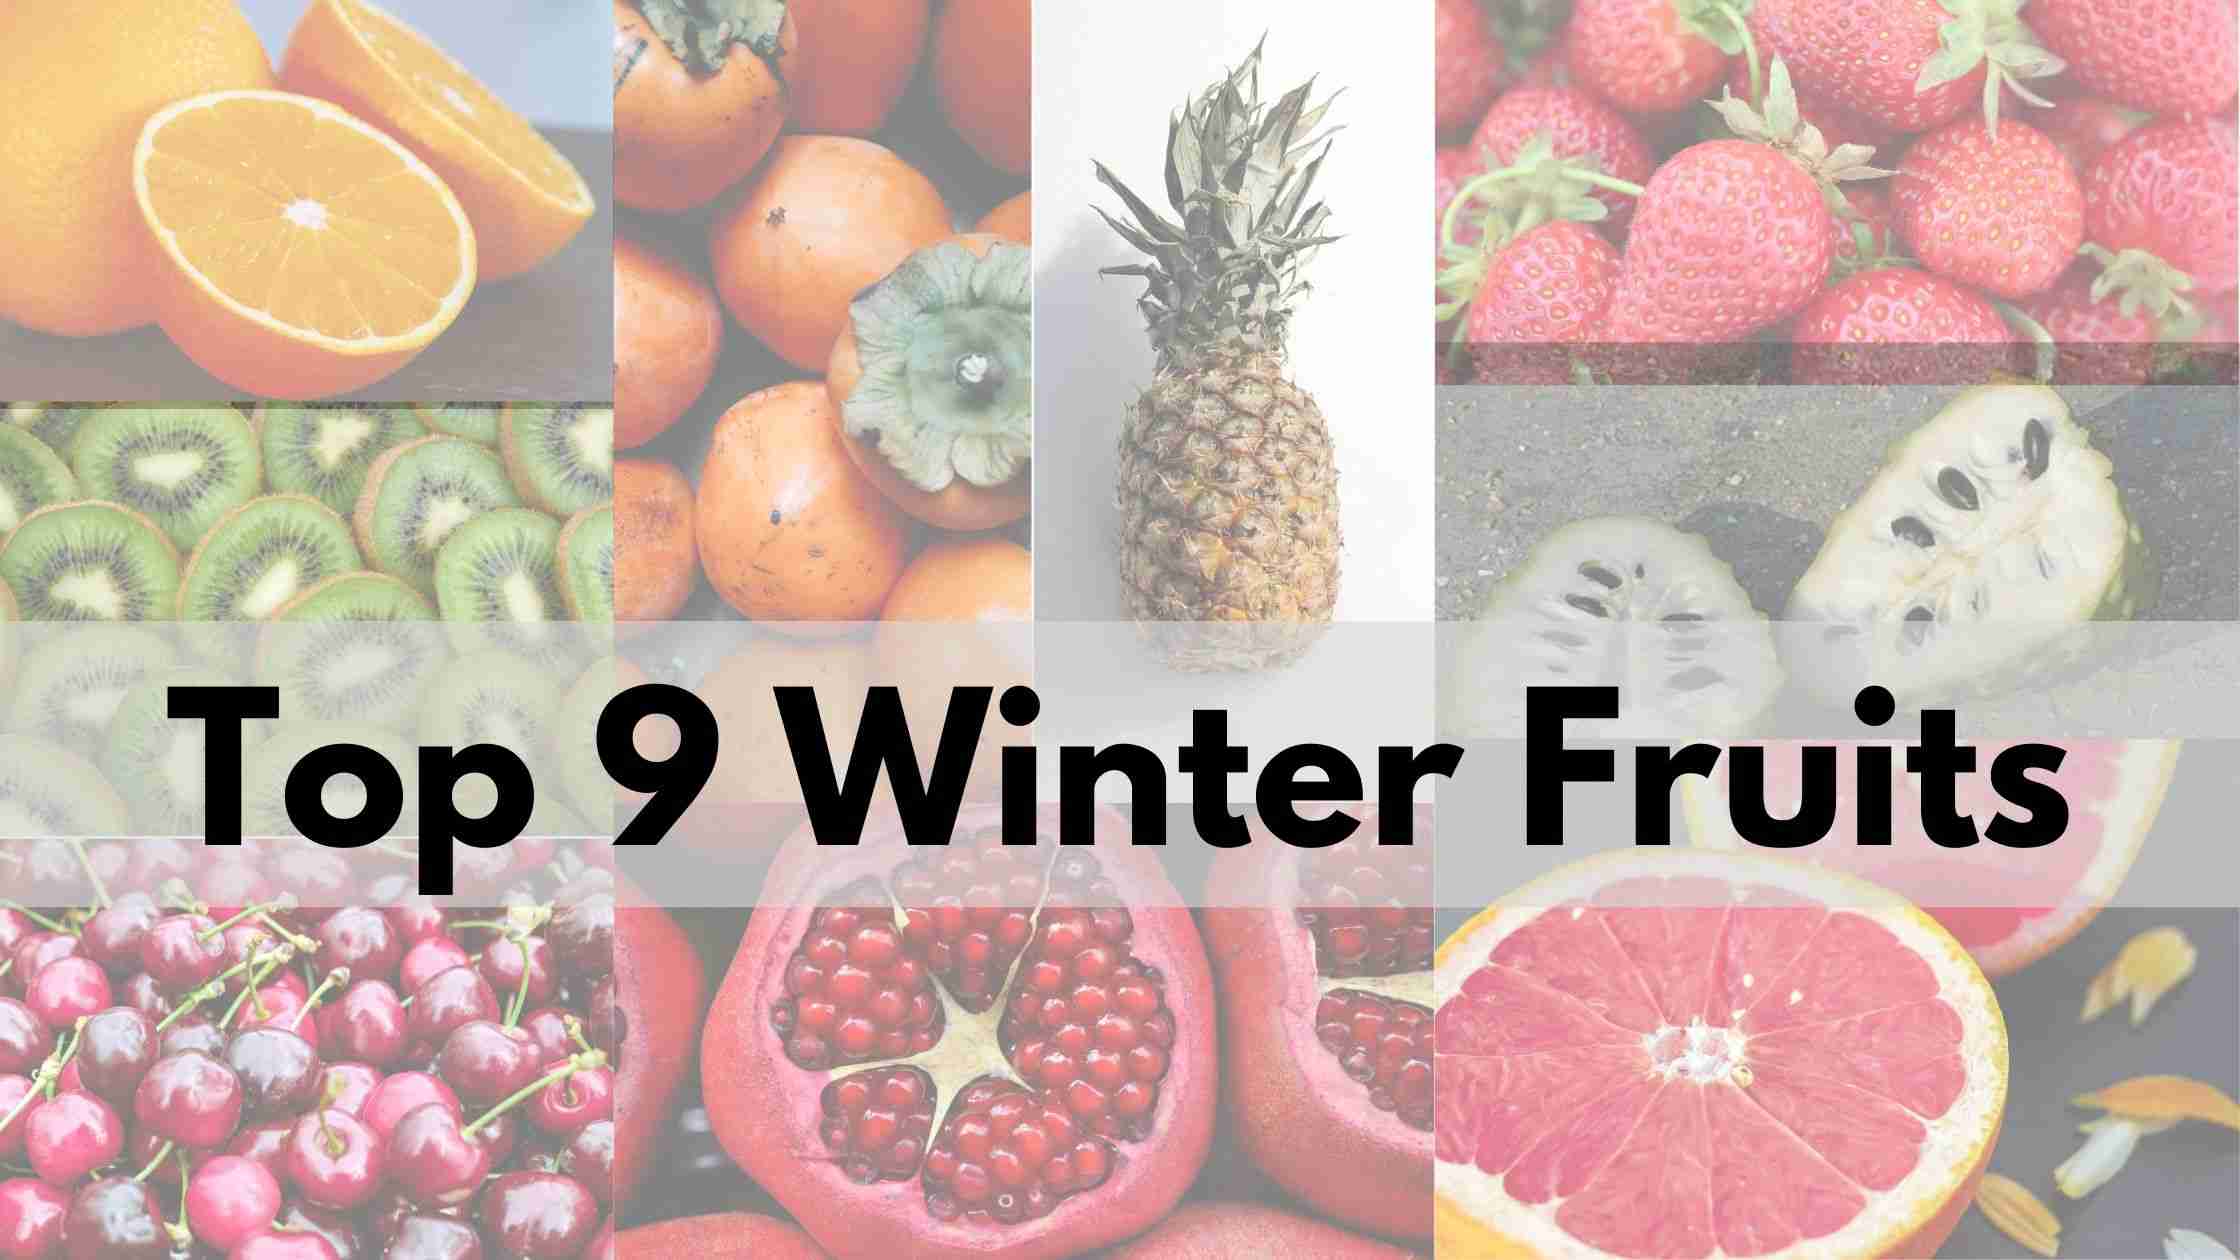 Top 9 Winter Fruits